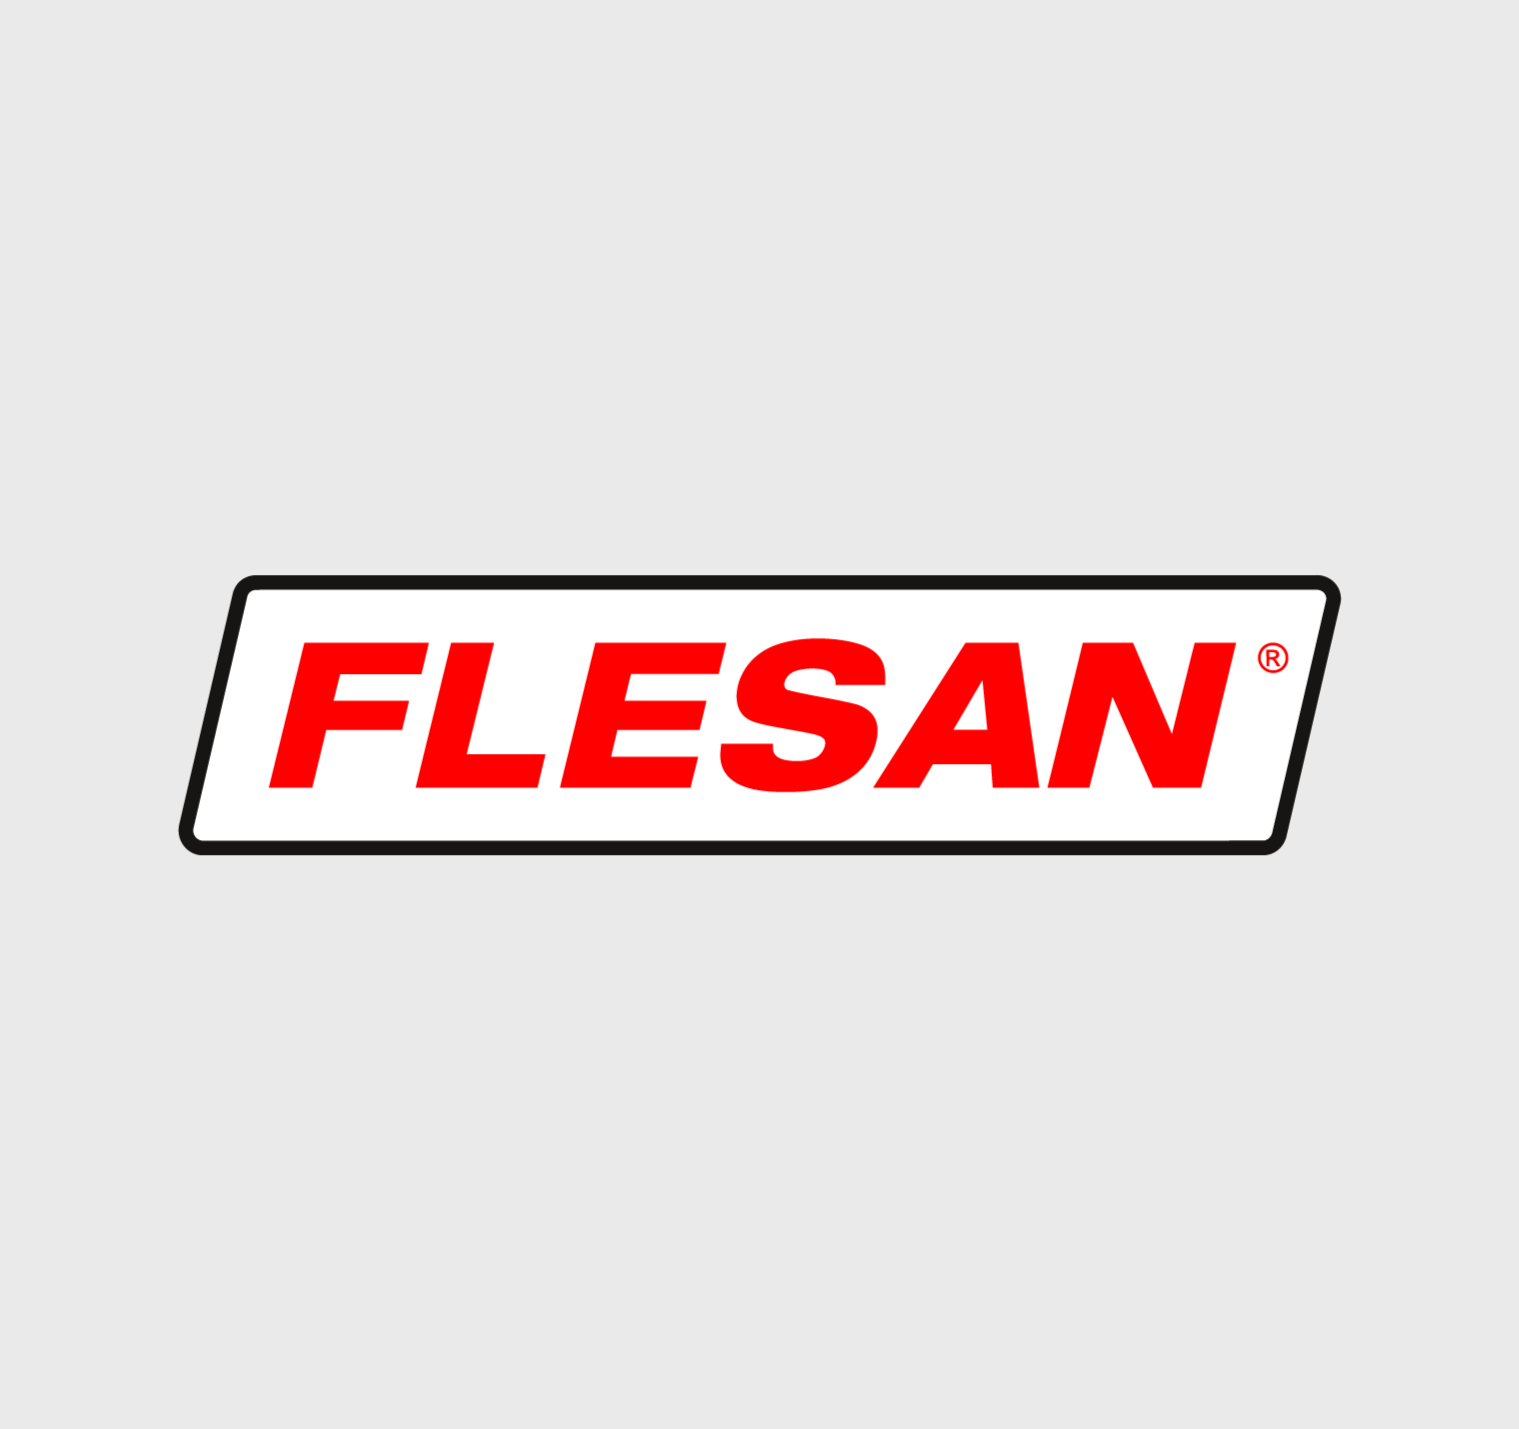 flesan.png